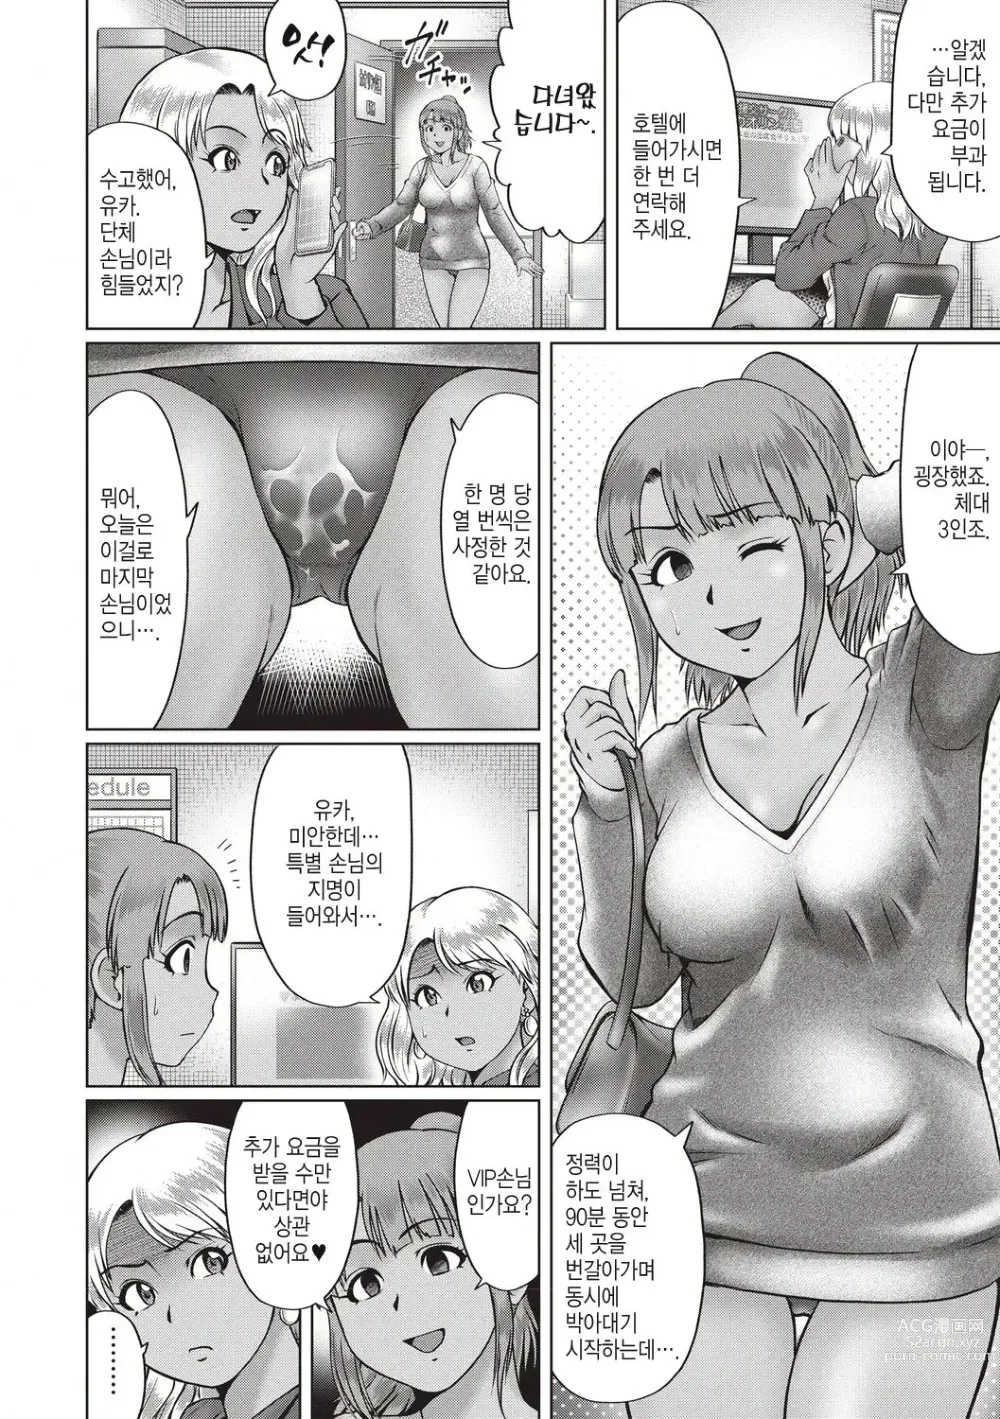 Page 2 of manga 기나긴 밤... -후편-